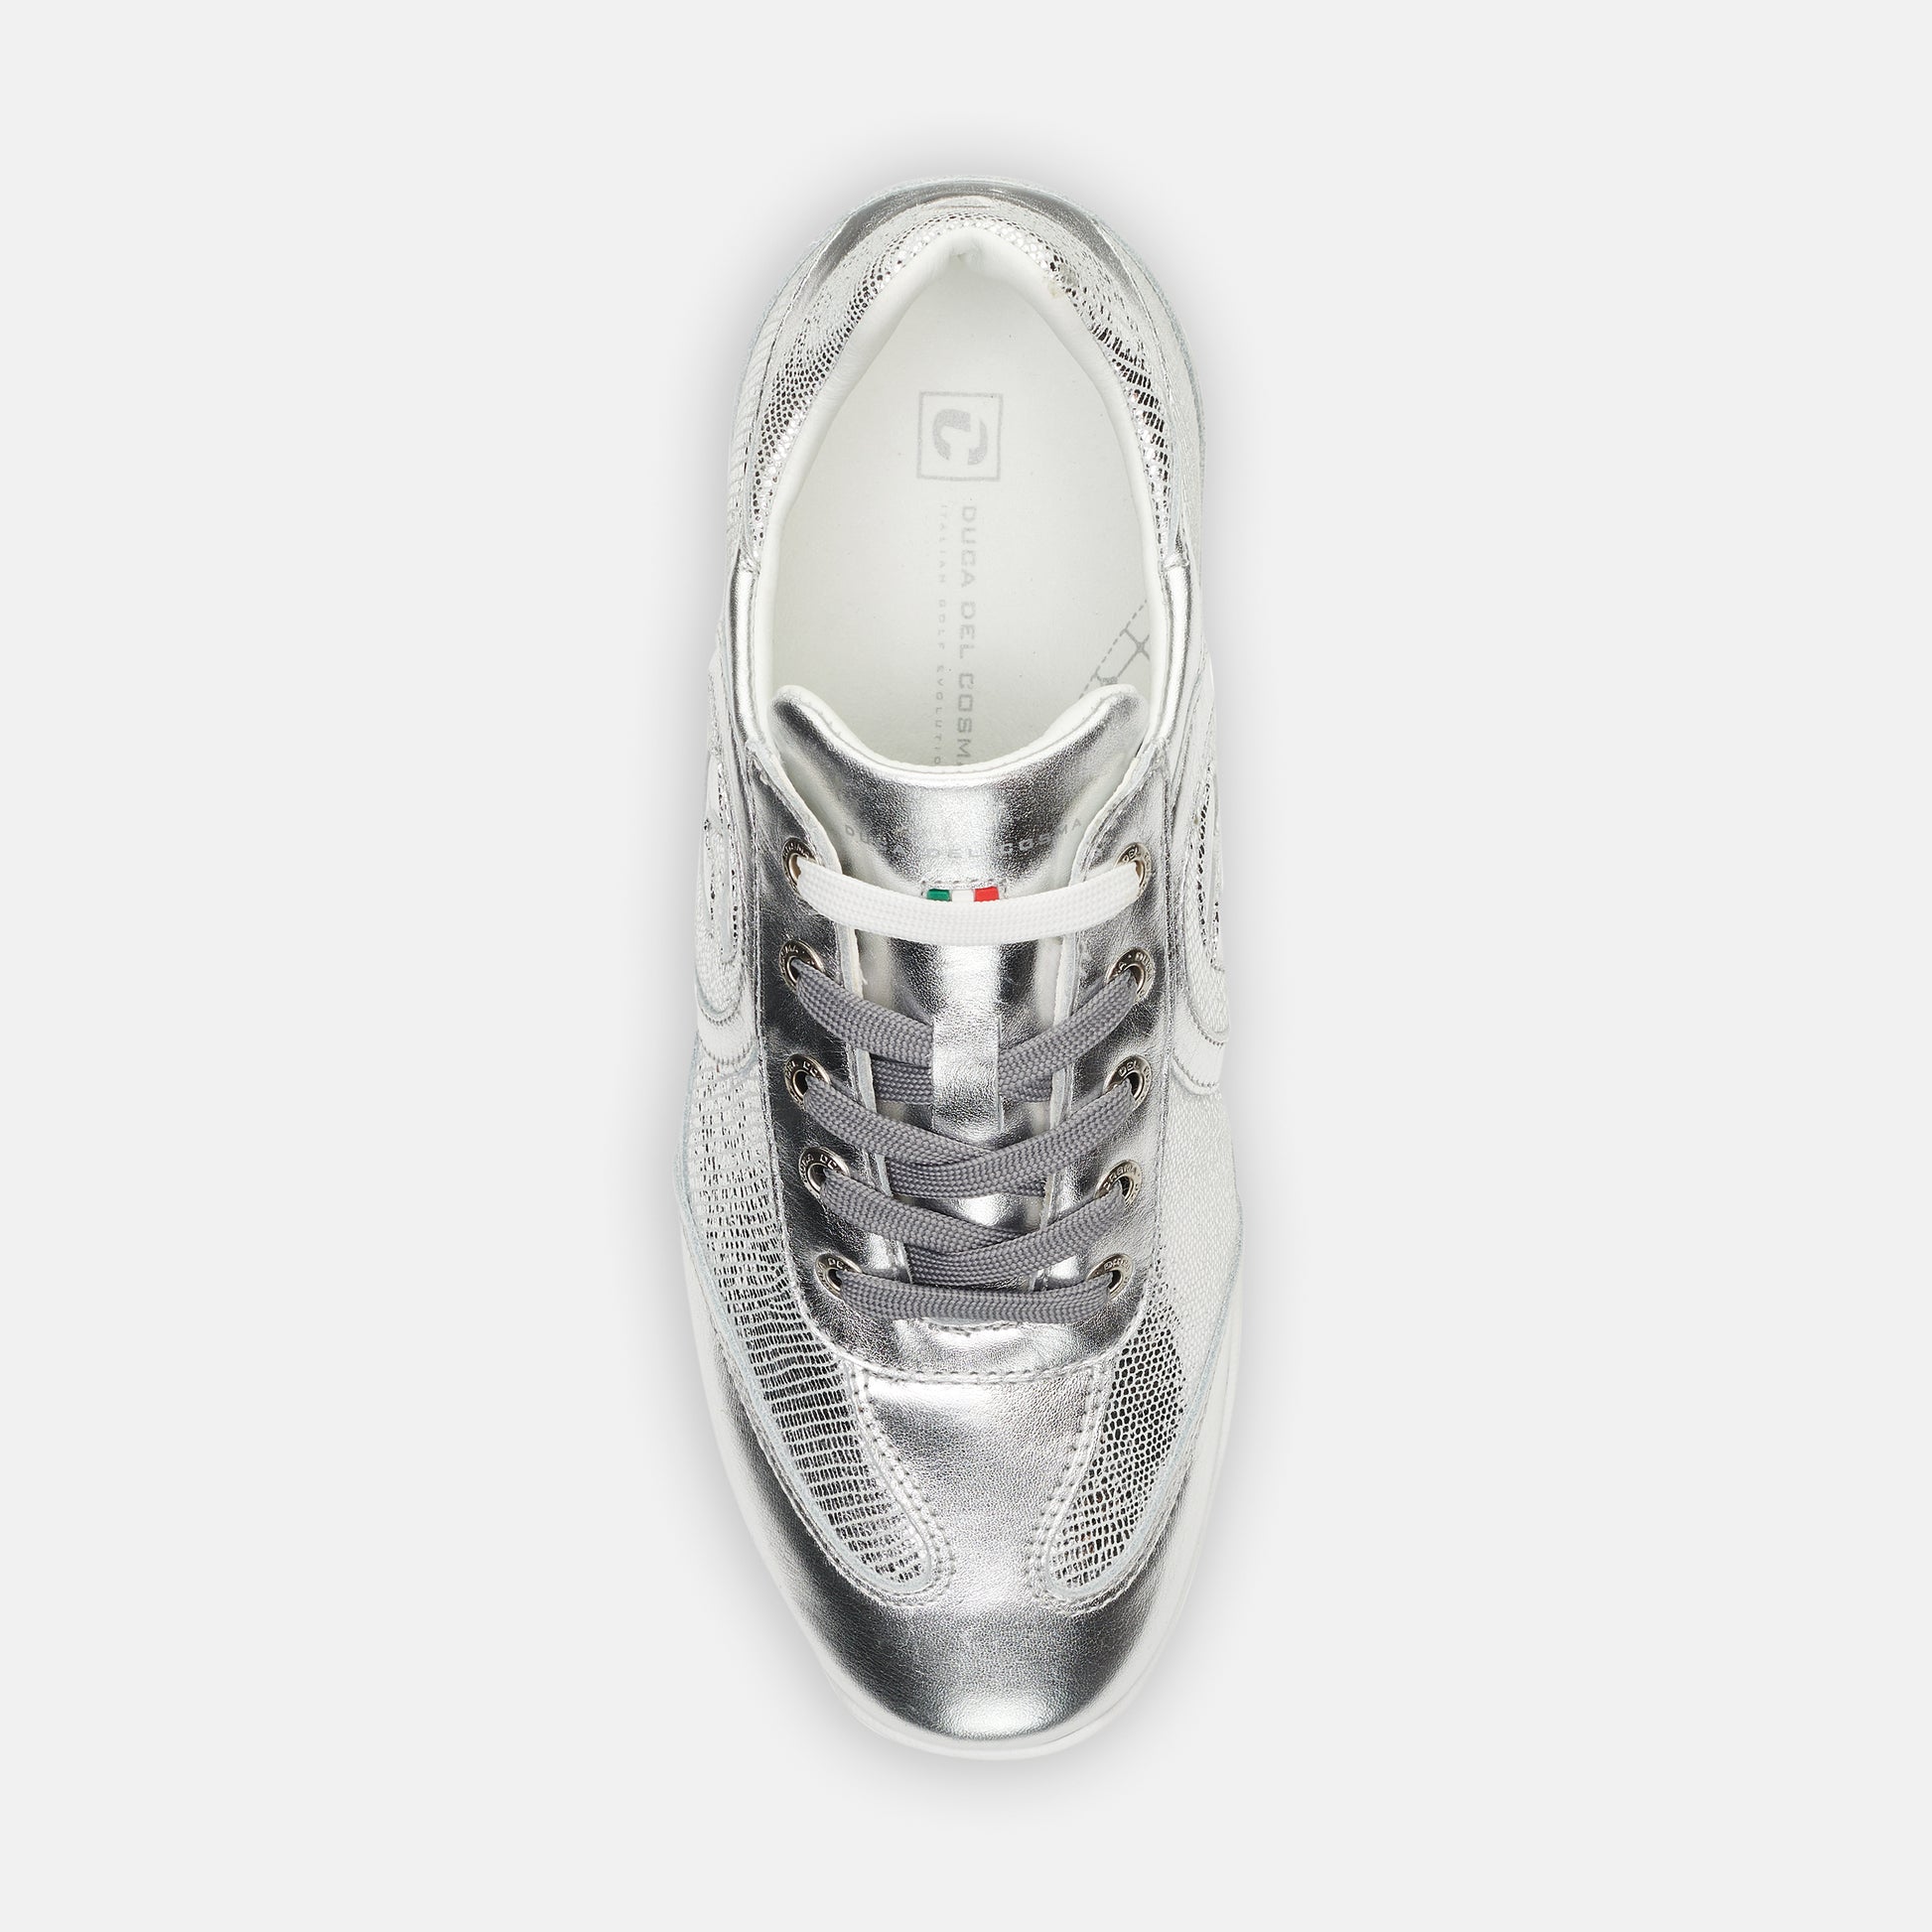 Kubananeo waterproof silver women's golf shoe is waterproof and comfortable